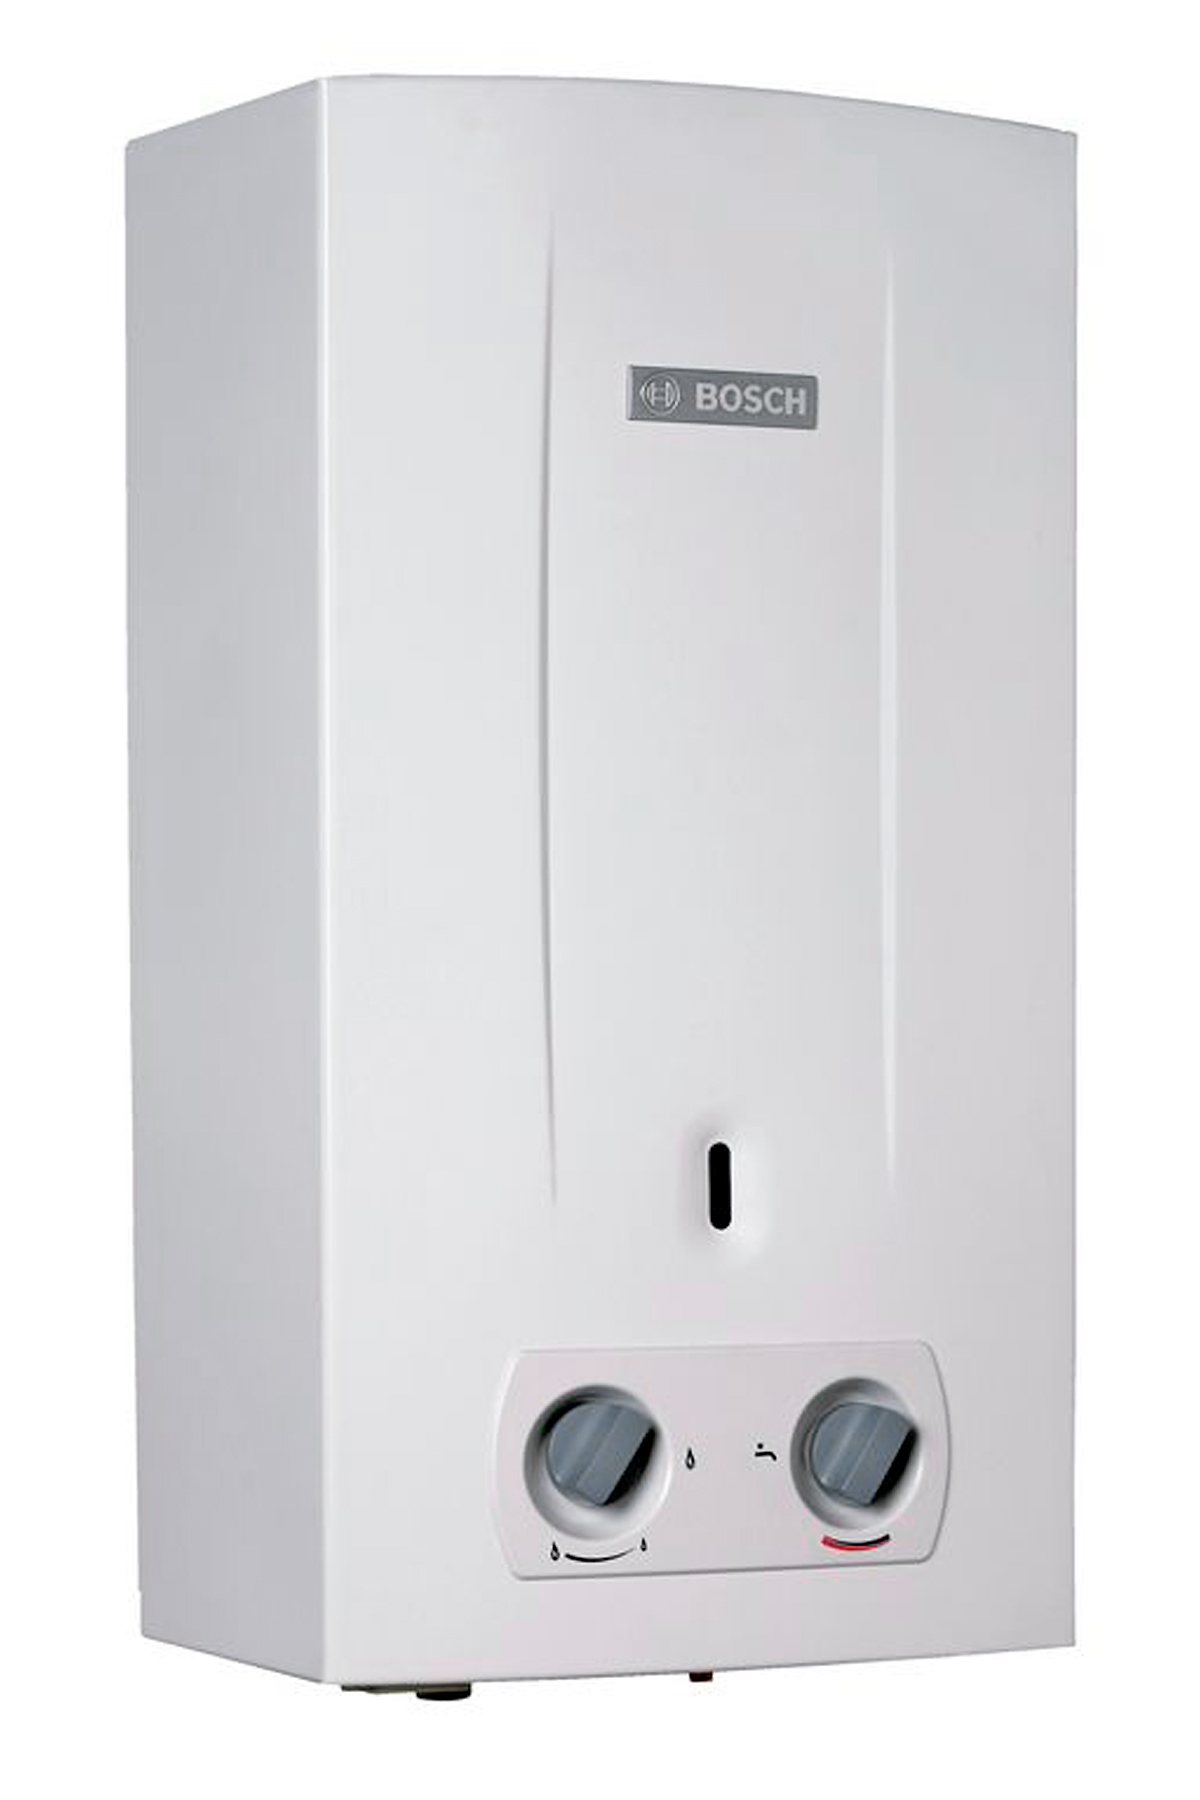 Характеристики колонка bosch газовая Bosch Therm 2000 O W 10 KB (7736500992)